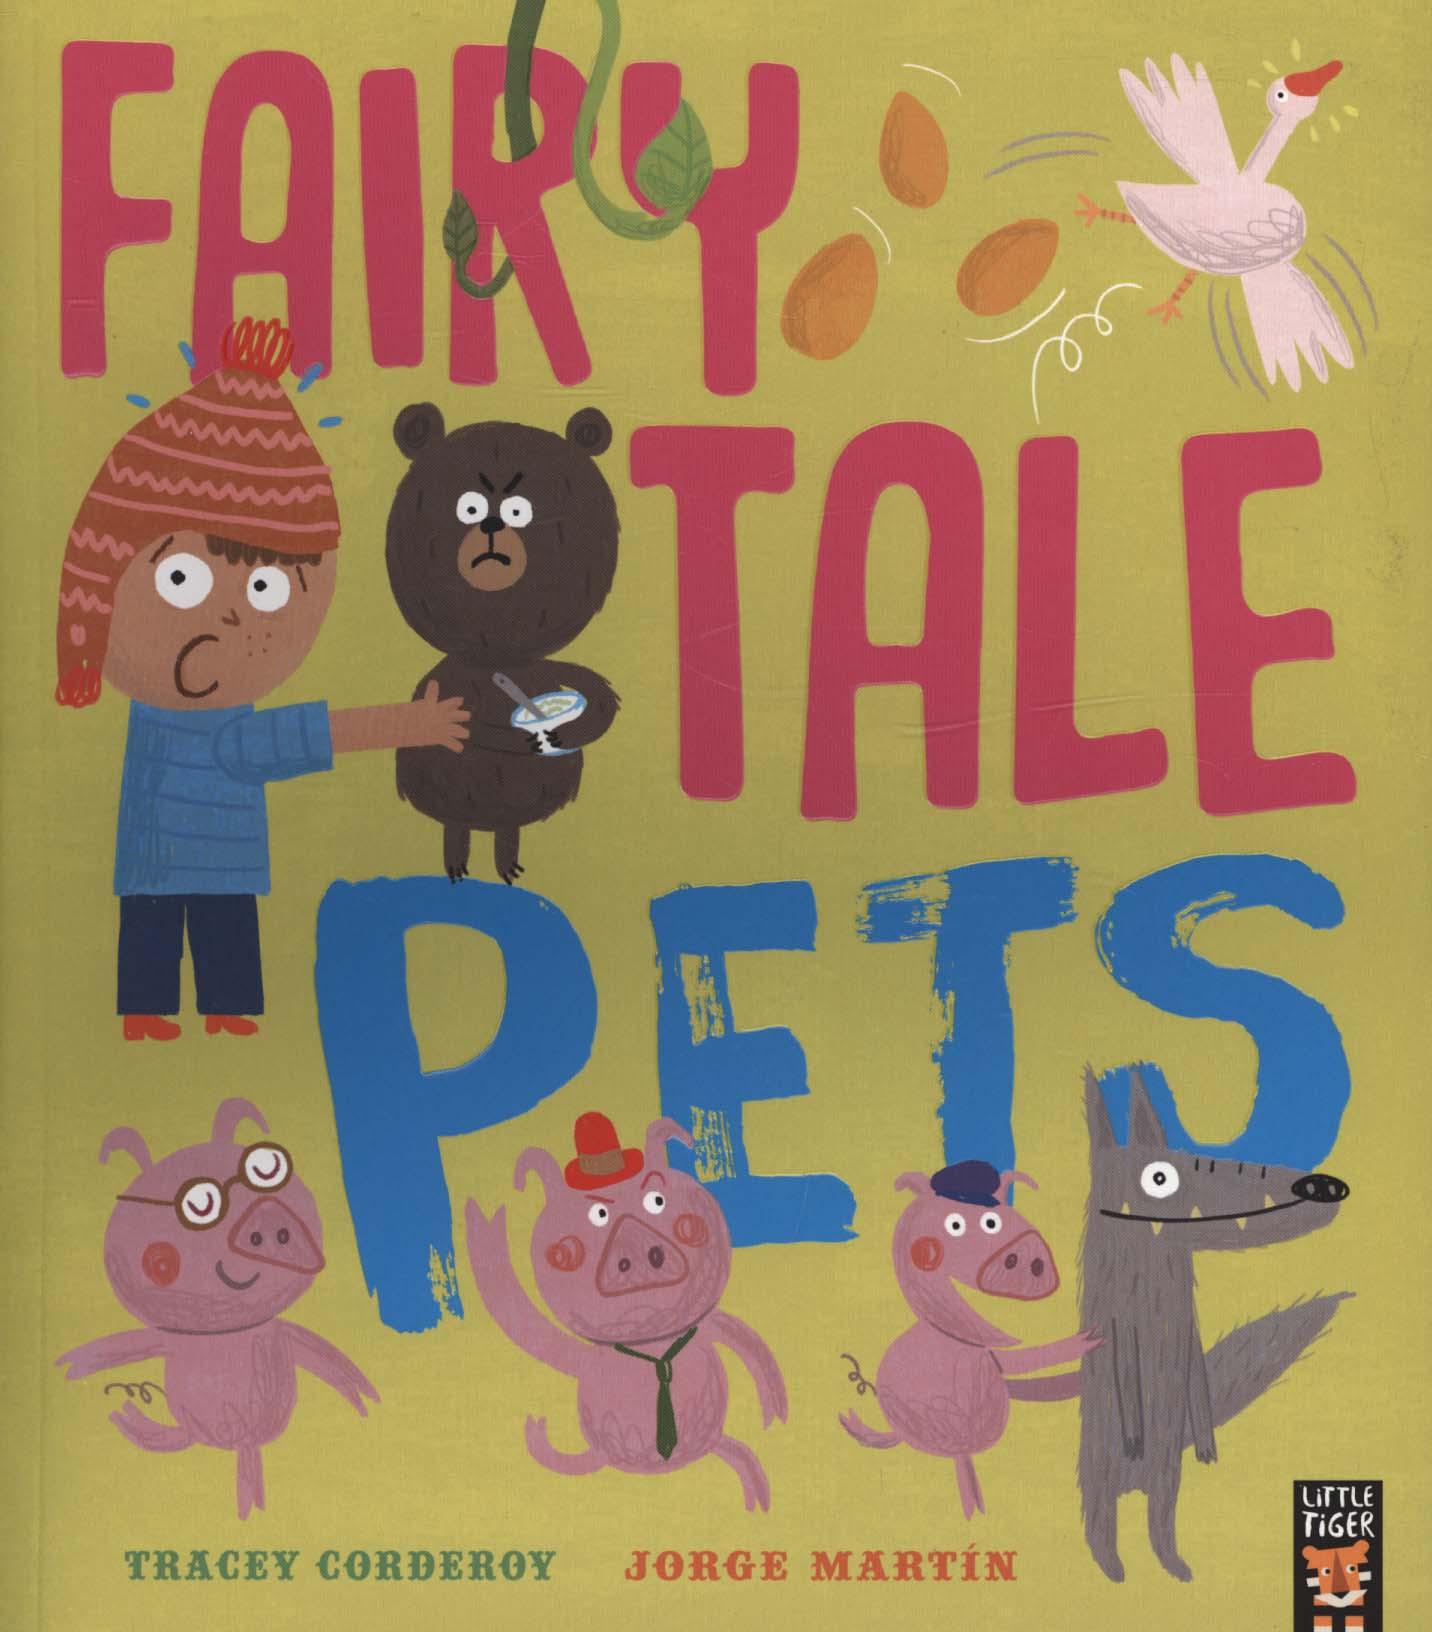 Fairy Tale Pets